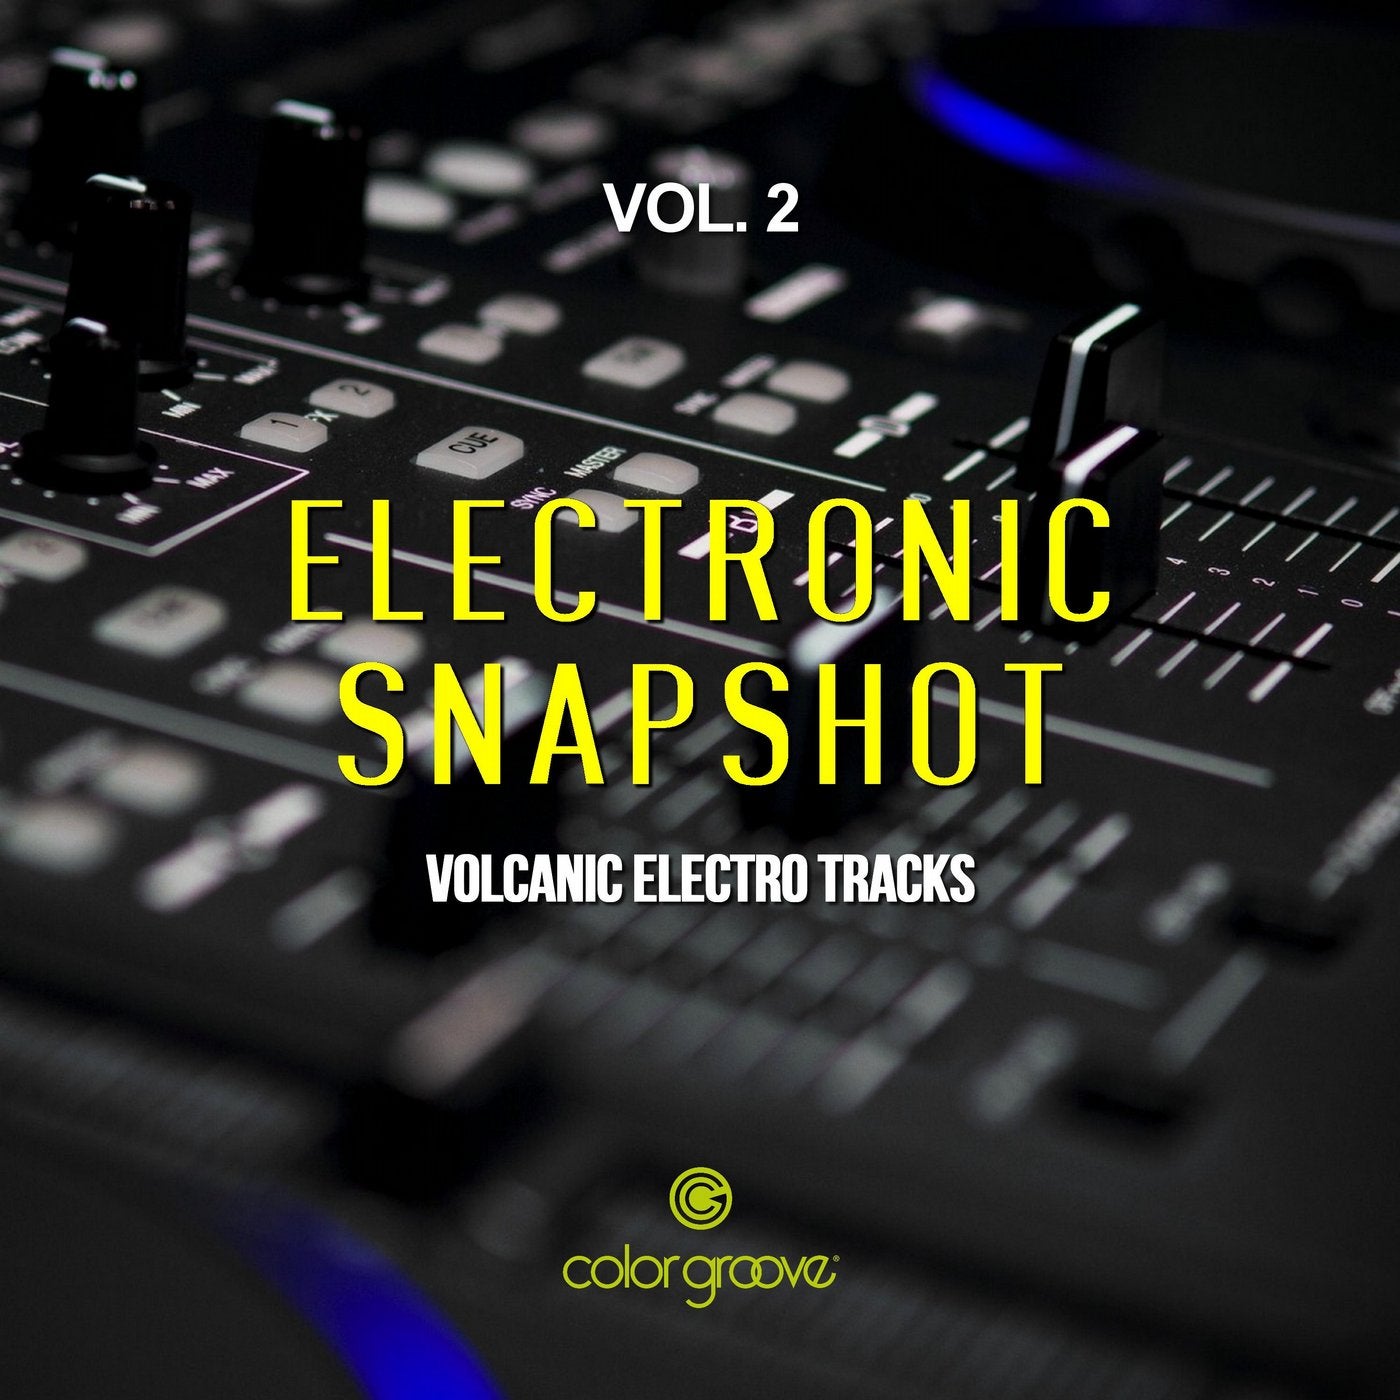 Electronic Snapshot, Vol. 2 (Volcanic Electro Tracks)